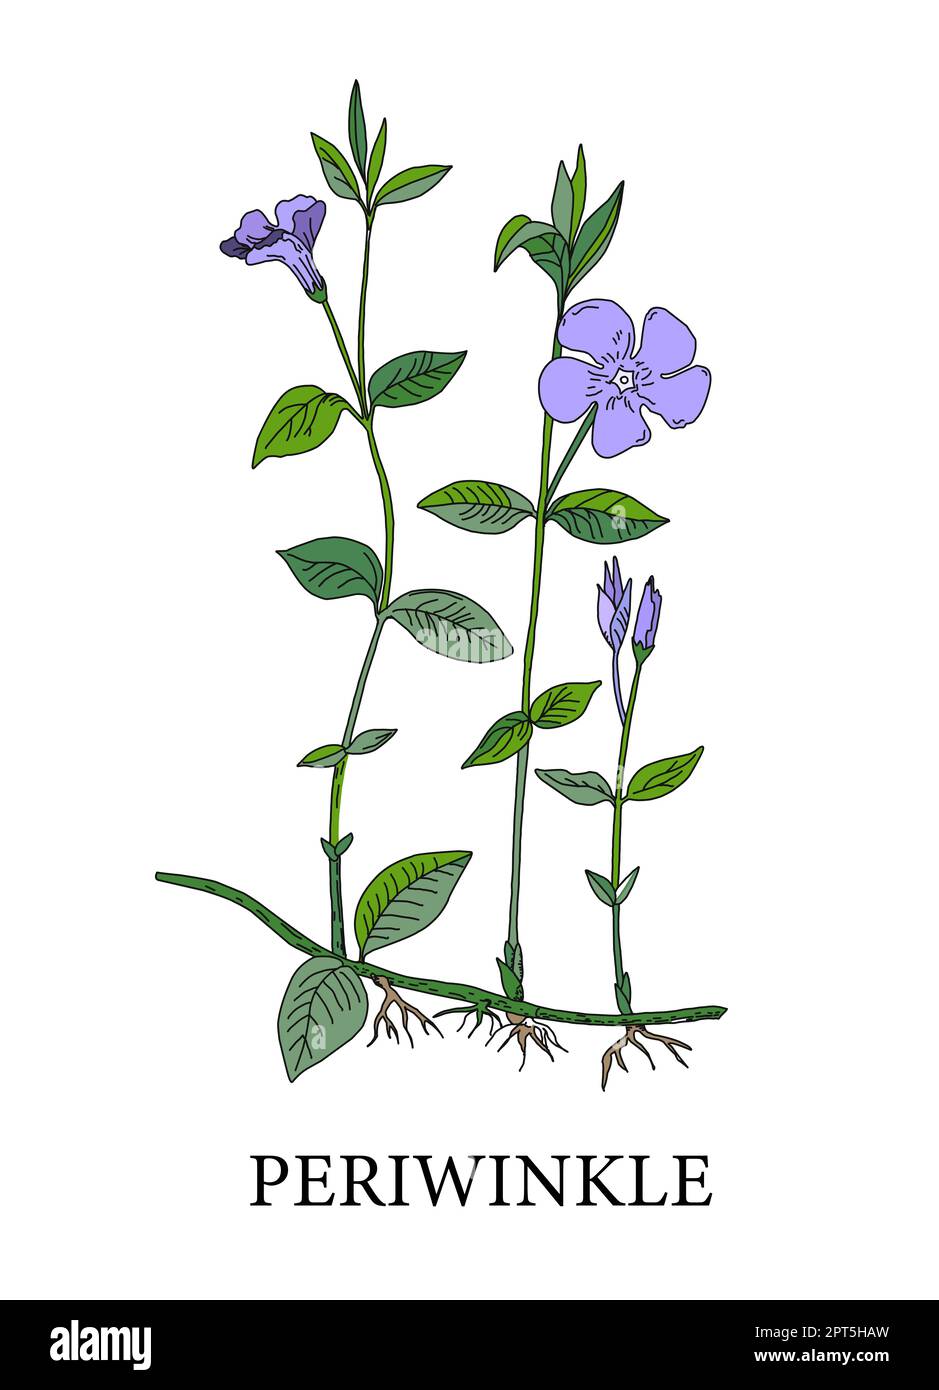 Periwinkle flower. Botanical illustration of periwinkles. Medicinal plants. Alternative medicine. Blue flower on a white background. Vector illustrati Stock Photo